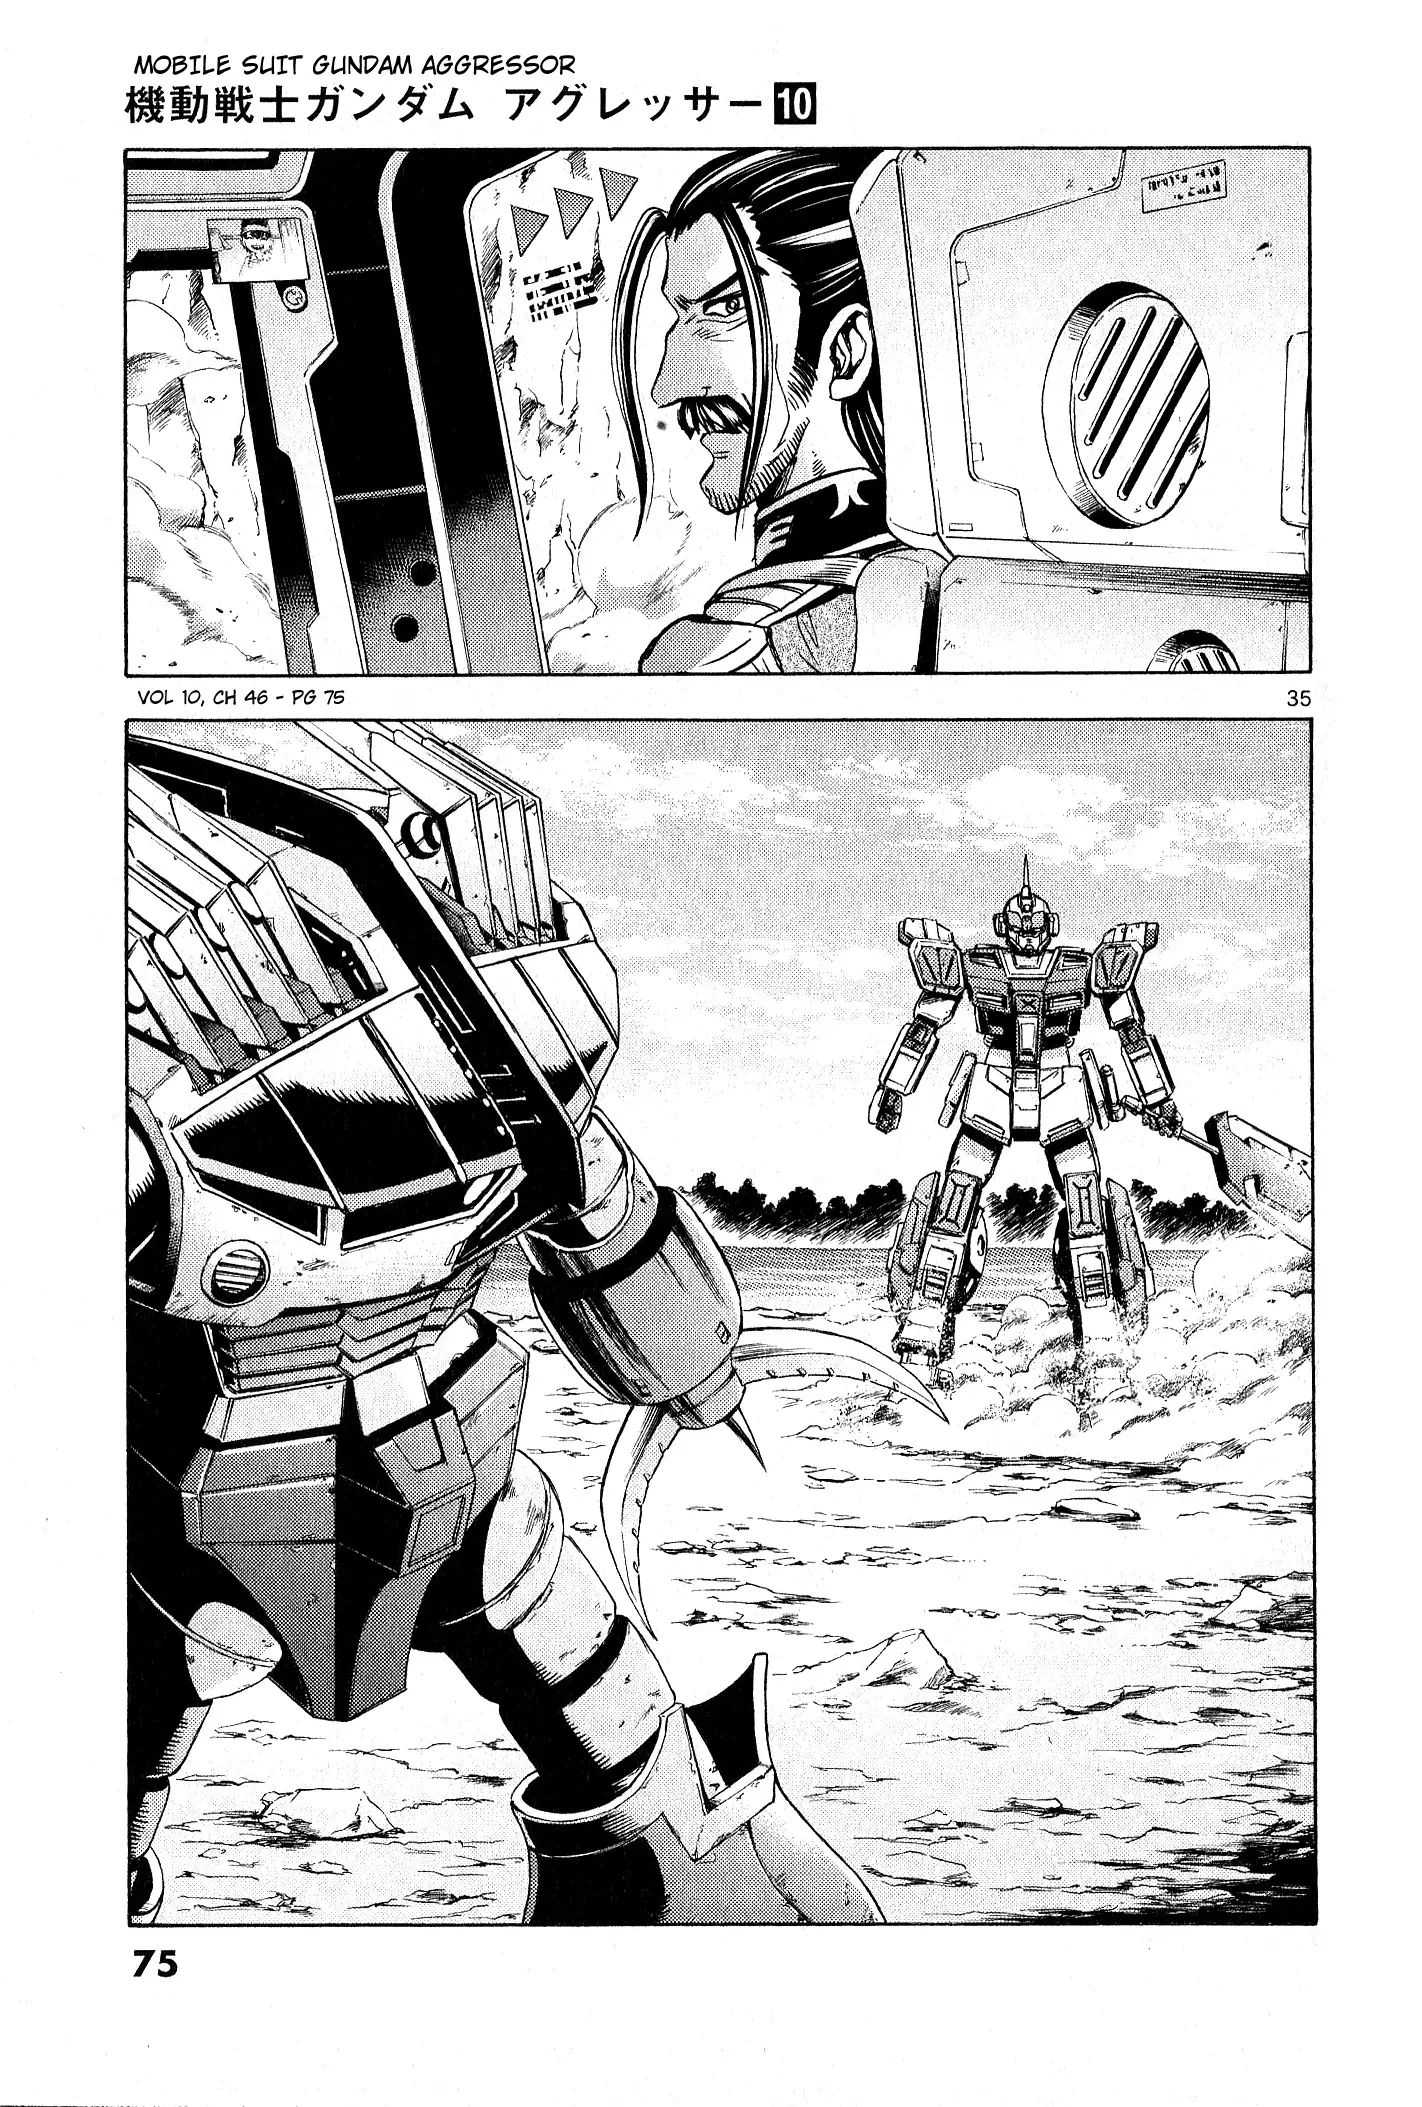 Mobile Suit Gundam Aggressor - 46 page 35-5d06a0fb